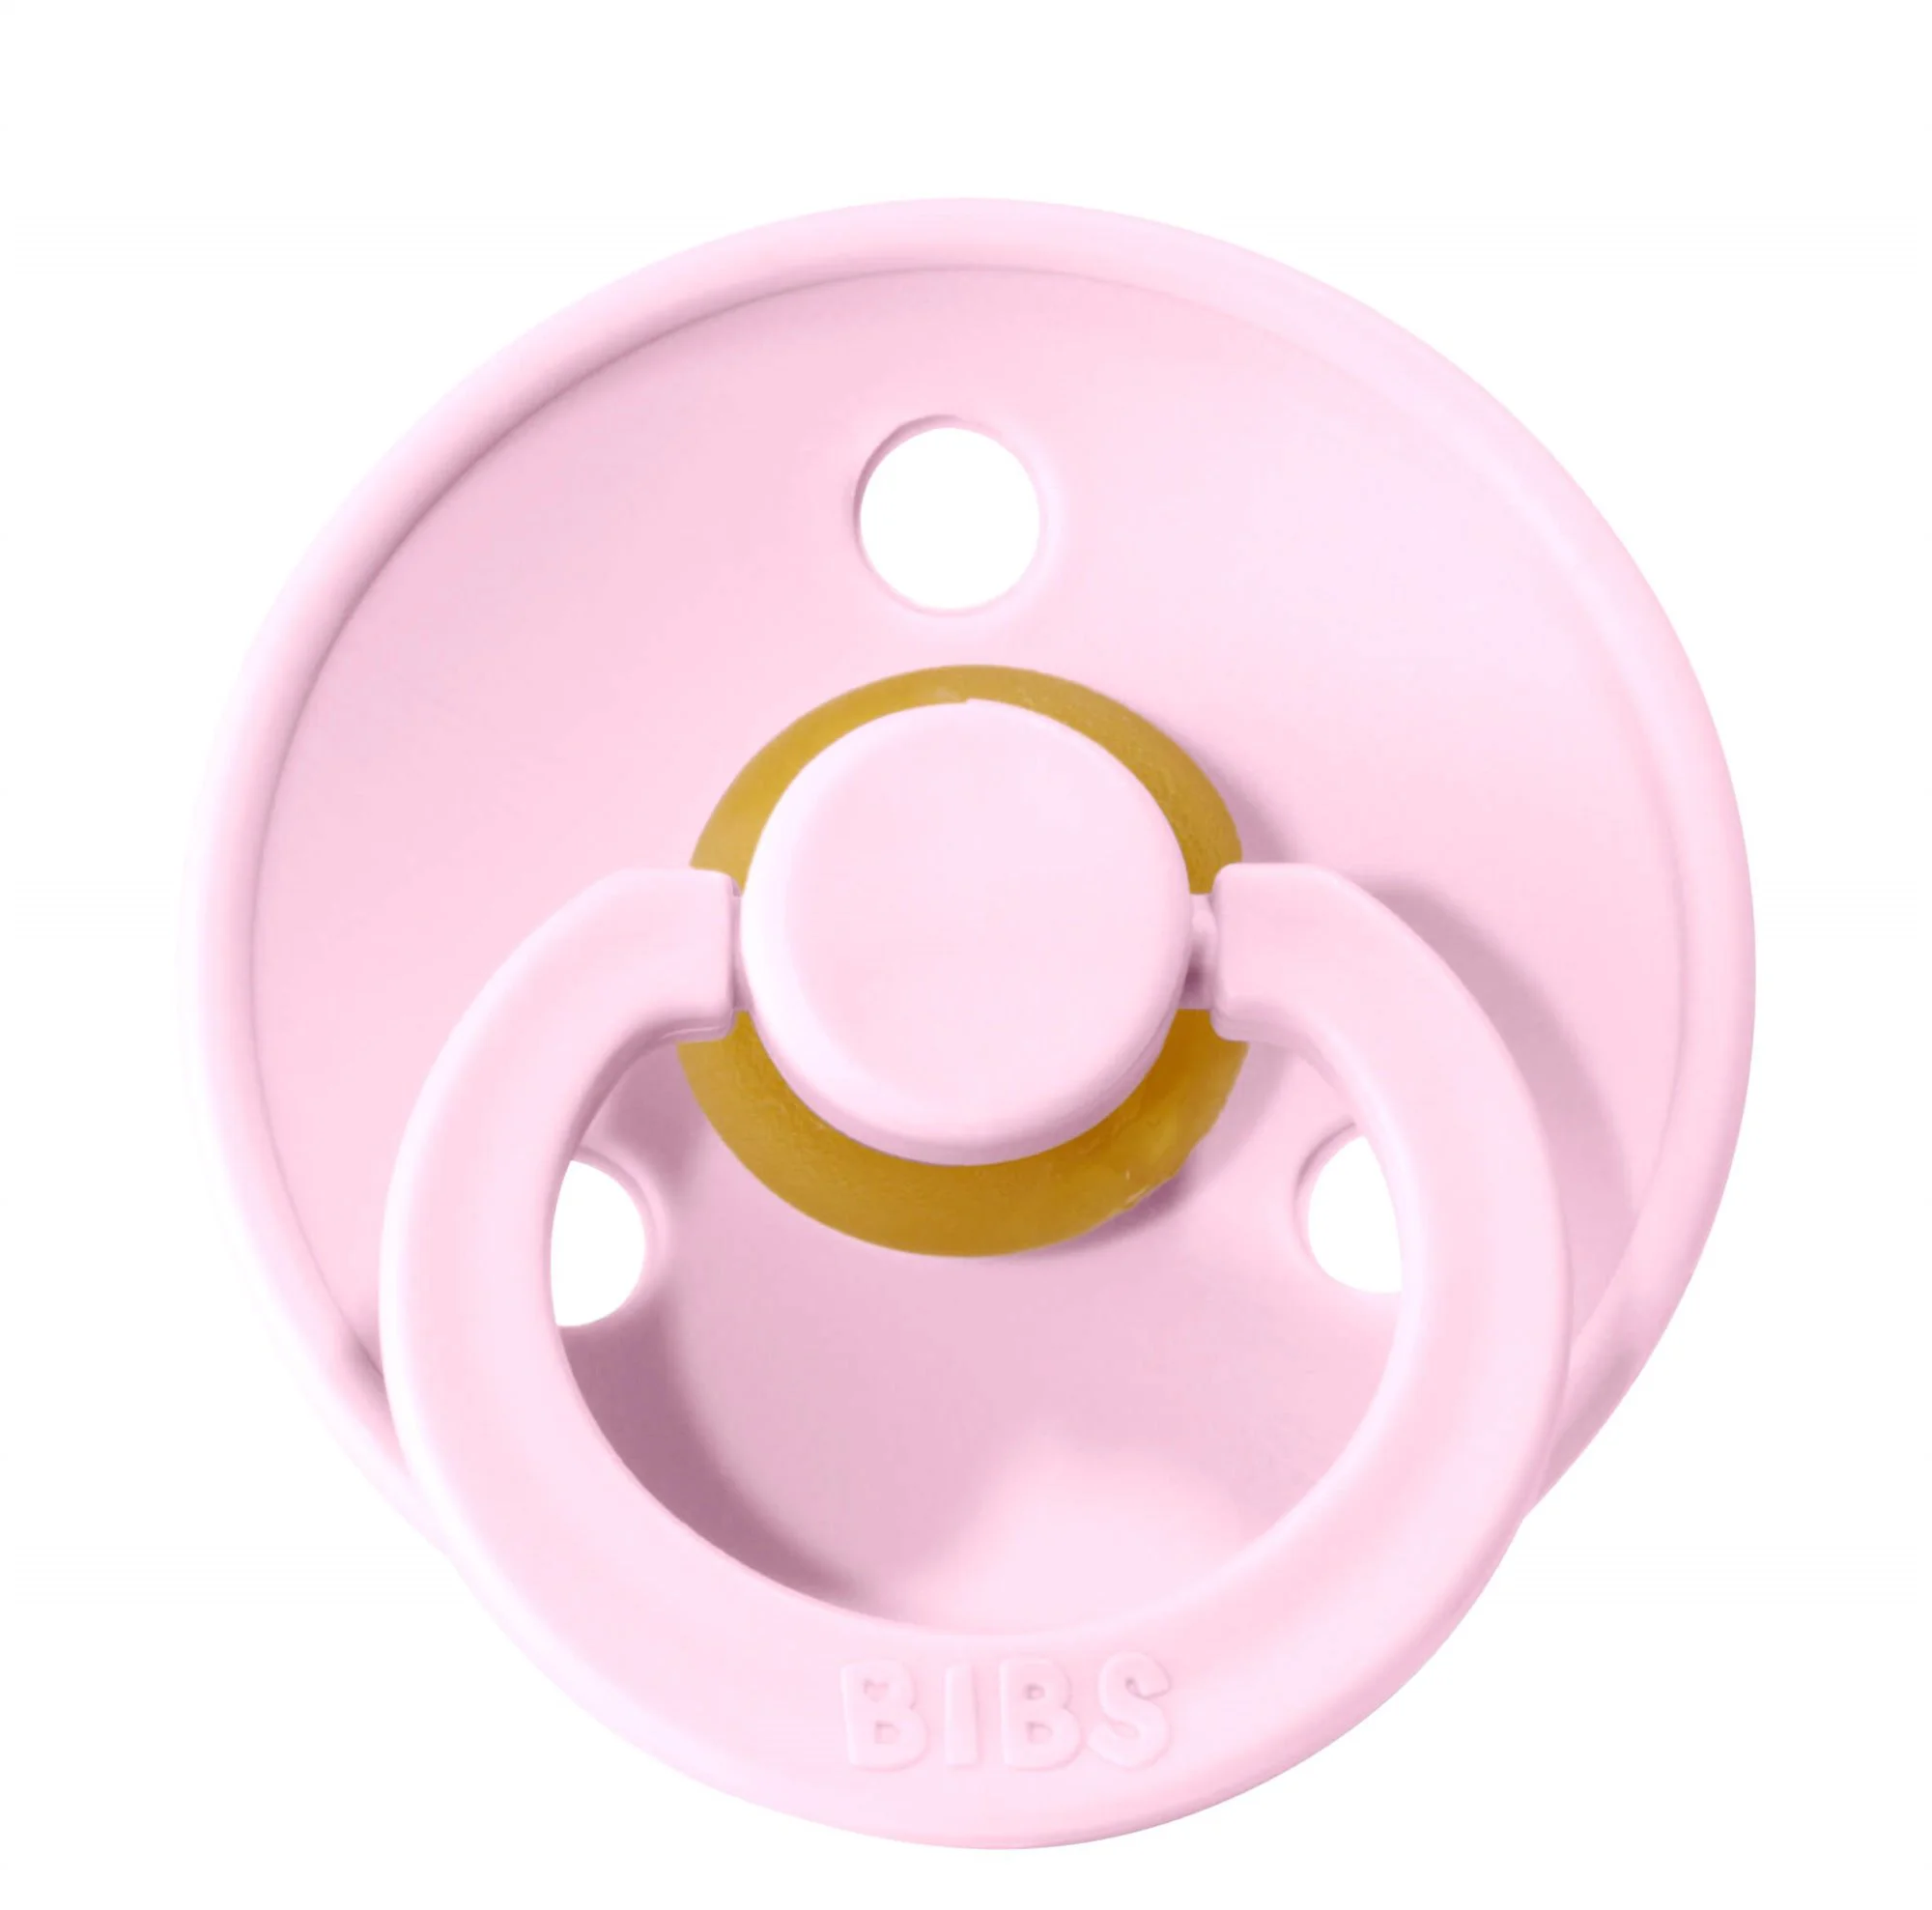 Suzeta rotunda BIBS Baby Pink din latex (0-6 luni)